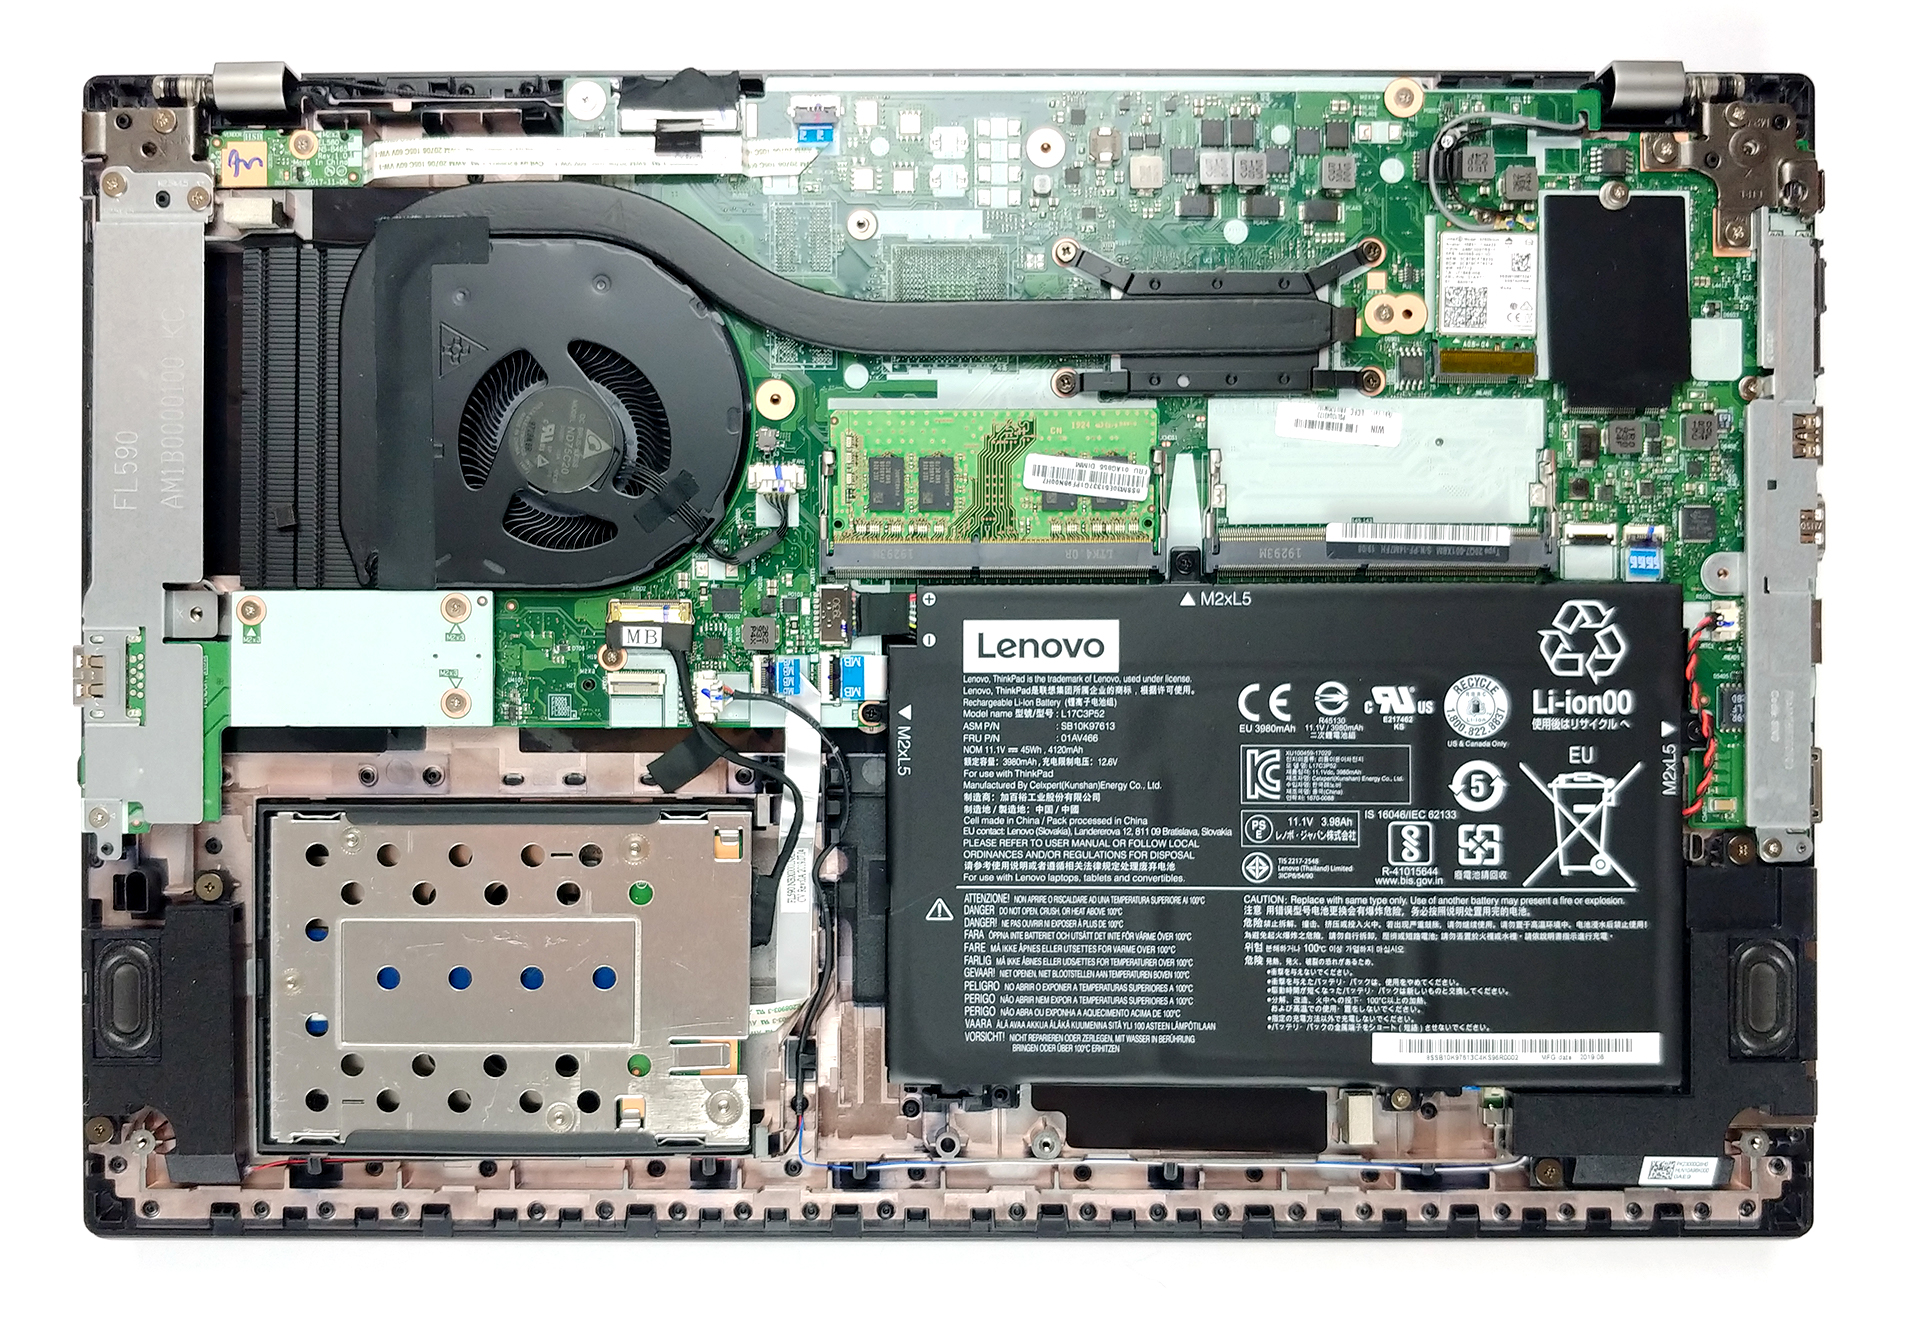 Inside Lenovo ThinkPad L590 - disassembly and upgrade options |  